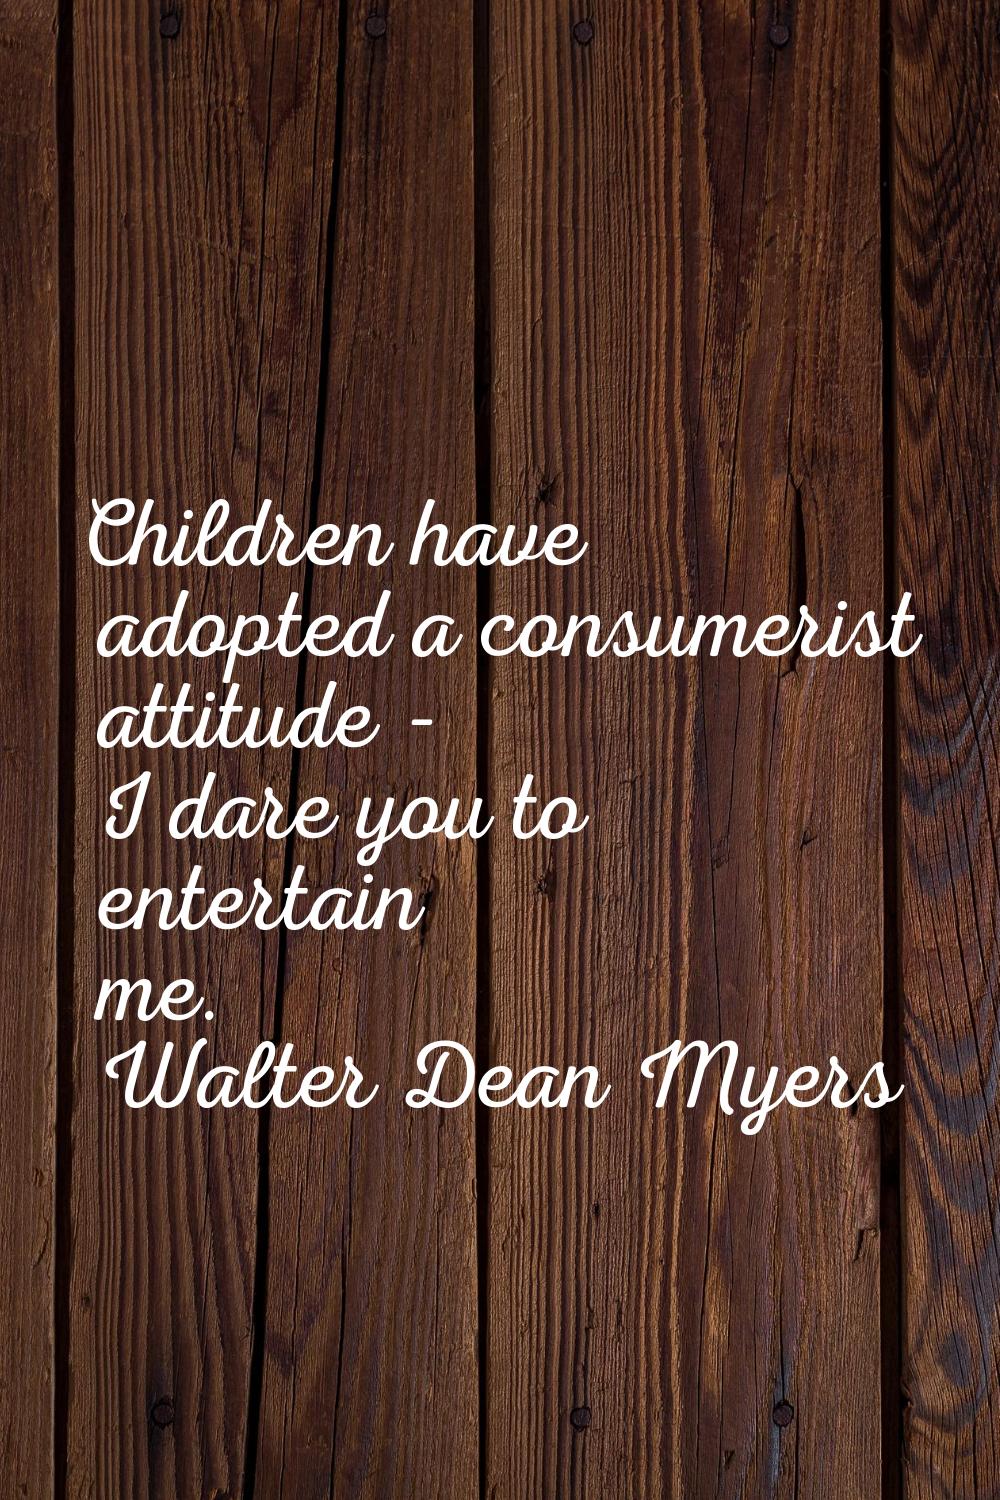 Children have adopted a consumerist attitude - I dare you to entertain me.